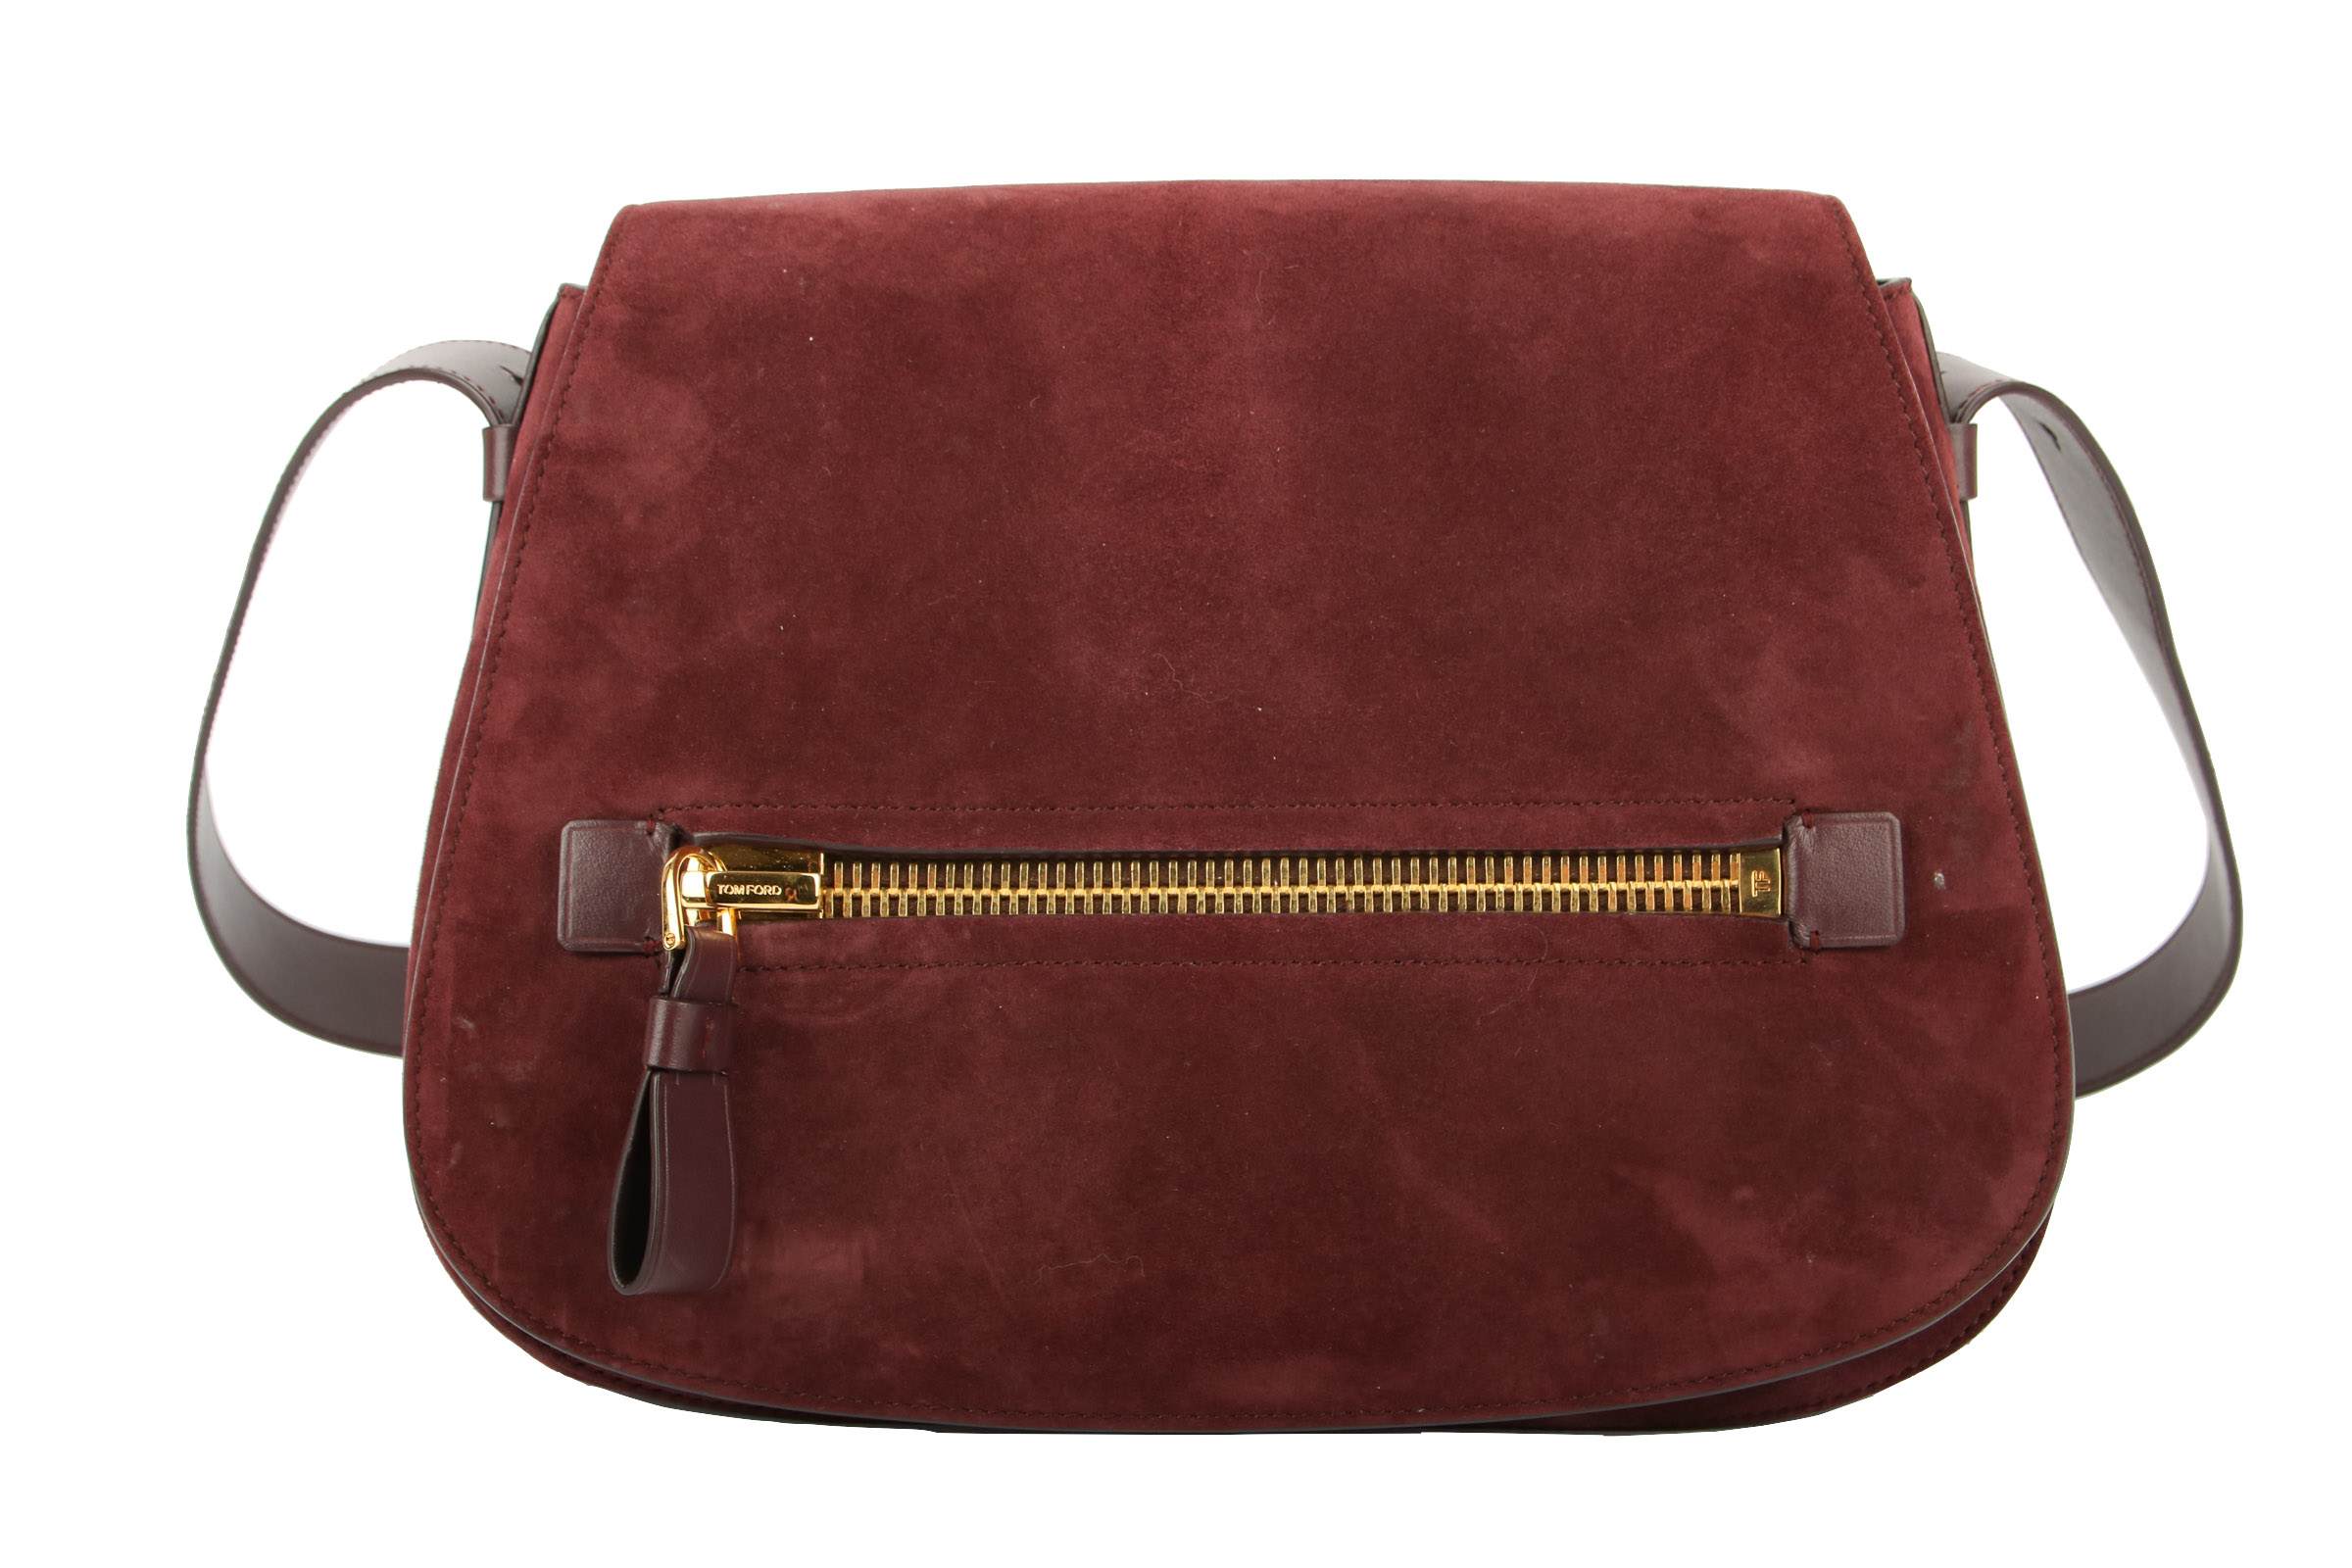 Tom Ford Handbags & Accessories | Luxussachen.com